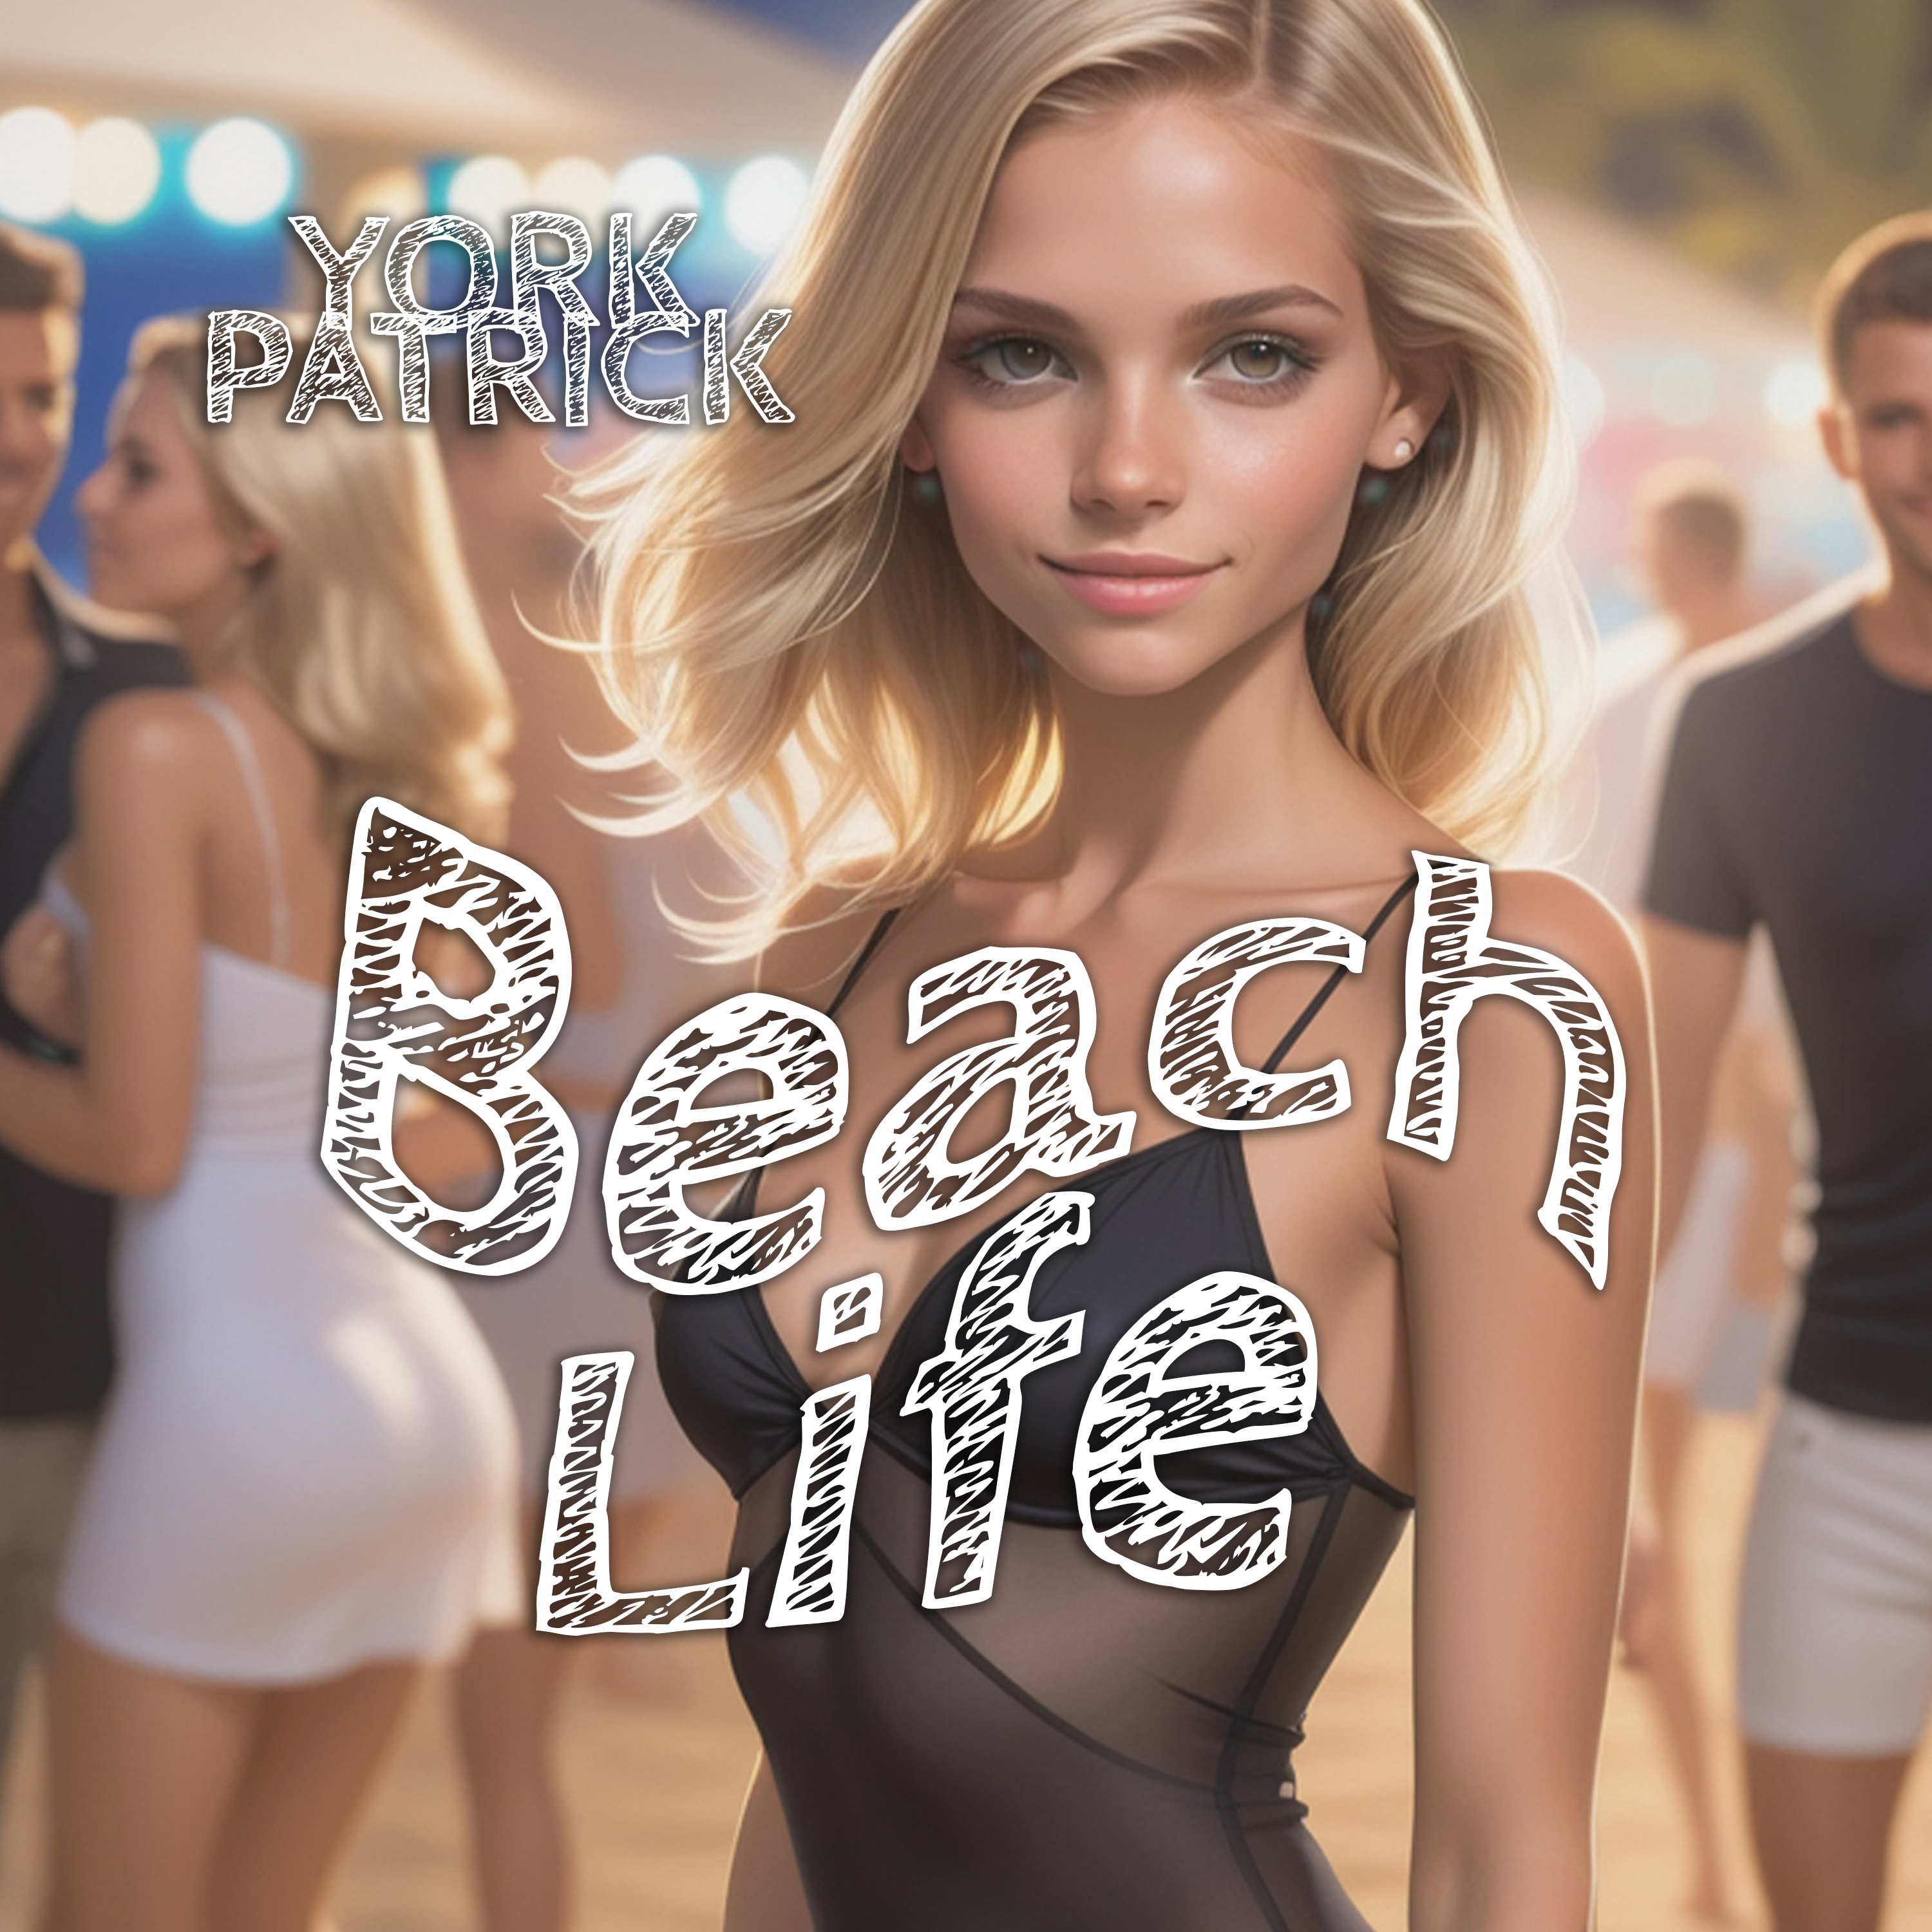 Album Cover: Beach Life